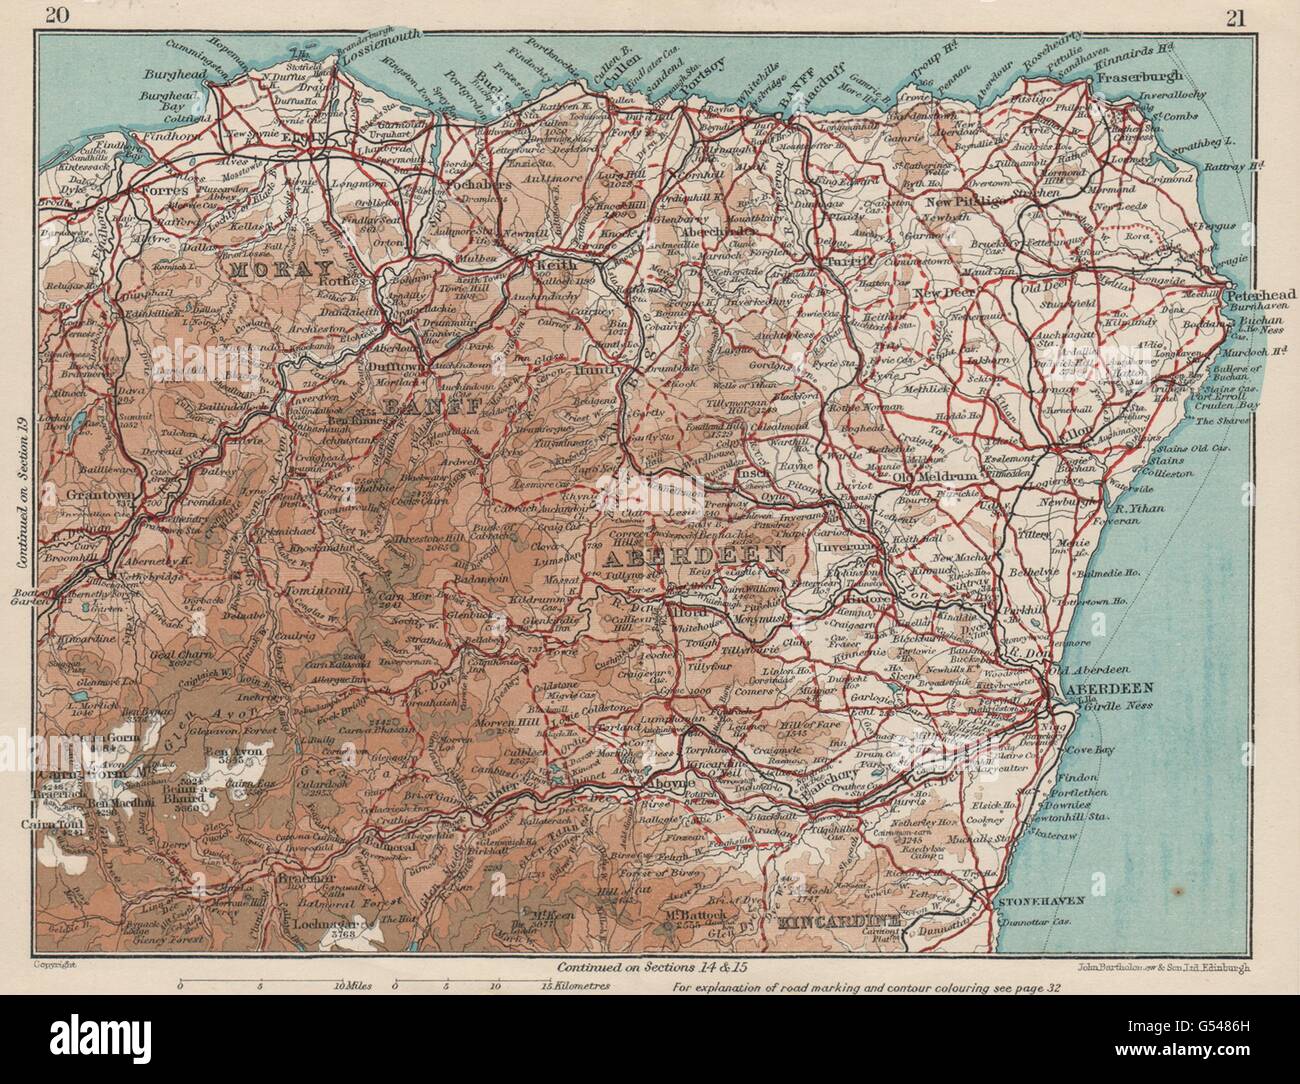 GRAMPIAN. Abderdeenshire Banff Moray Elgin. Vintage map plan. Scotland, 1932 Stock Photo